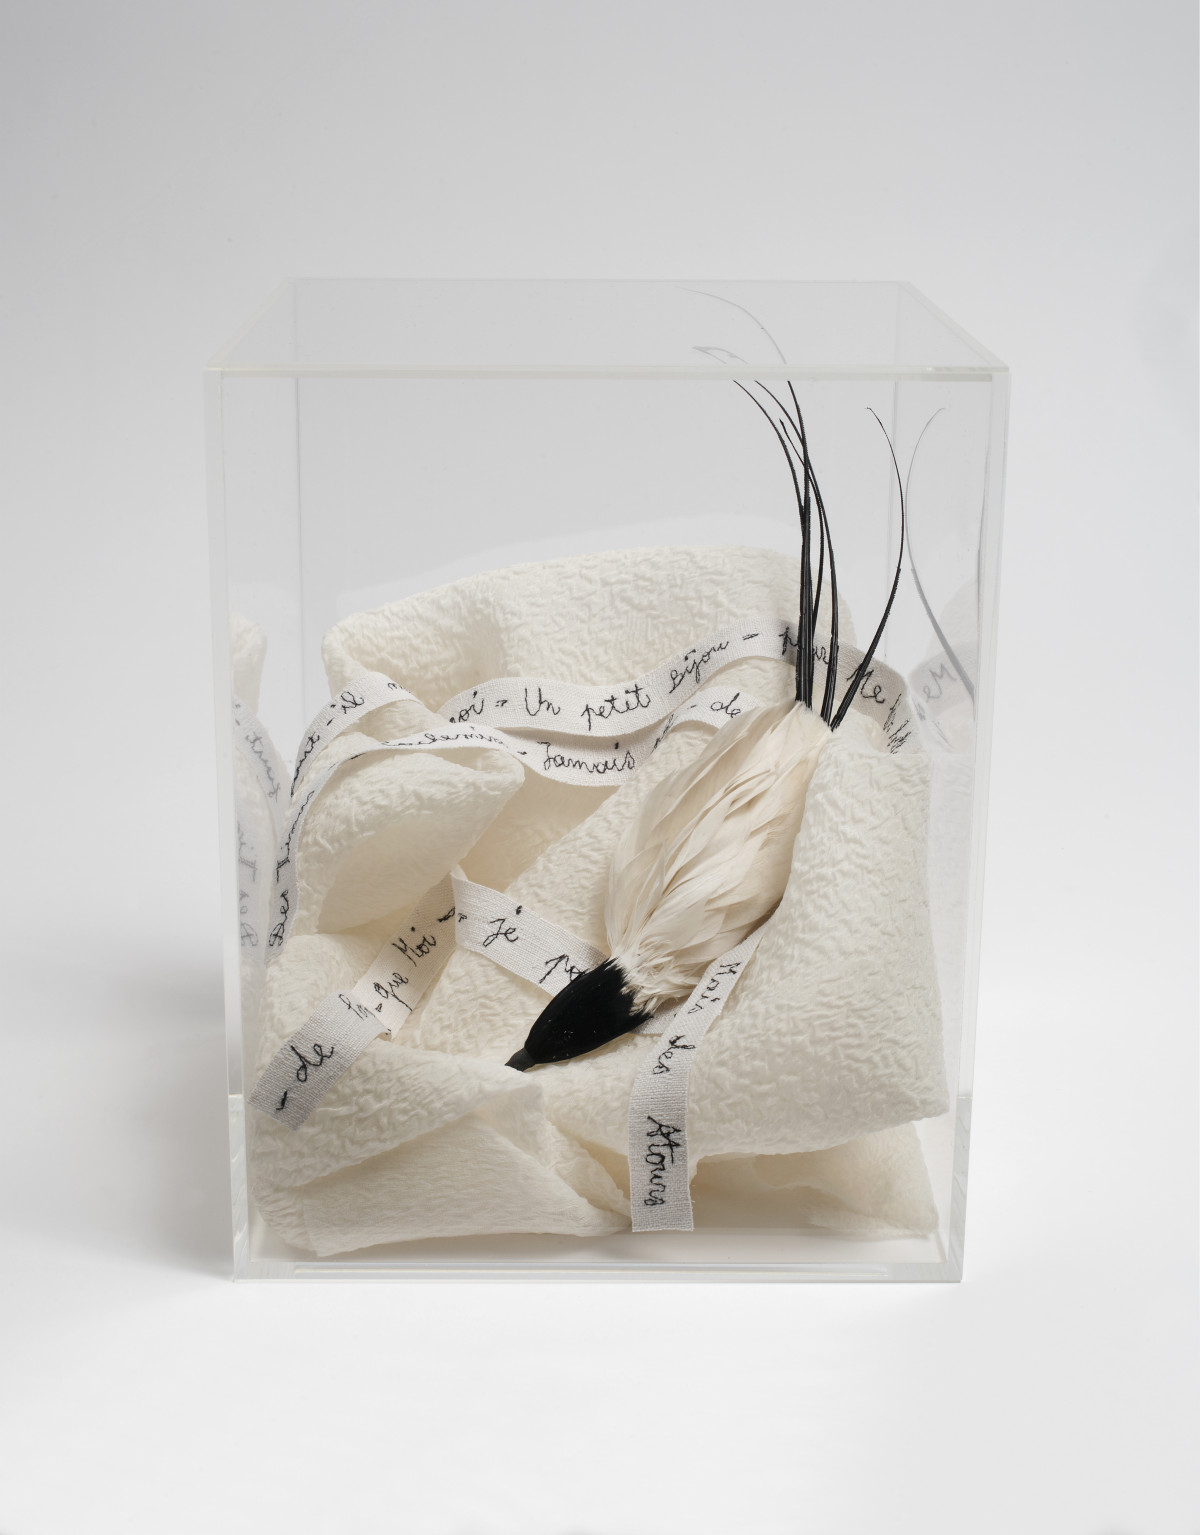 Véronique Arnold, ‘La Pompadour’, 2020,  plexiglass box, cream-colored flocked silk, antique black and white feathers, black thread embroidery on white ribbon